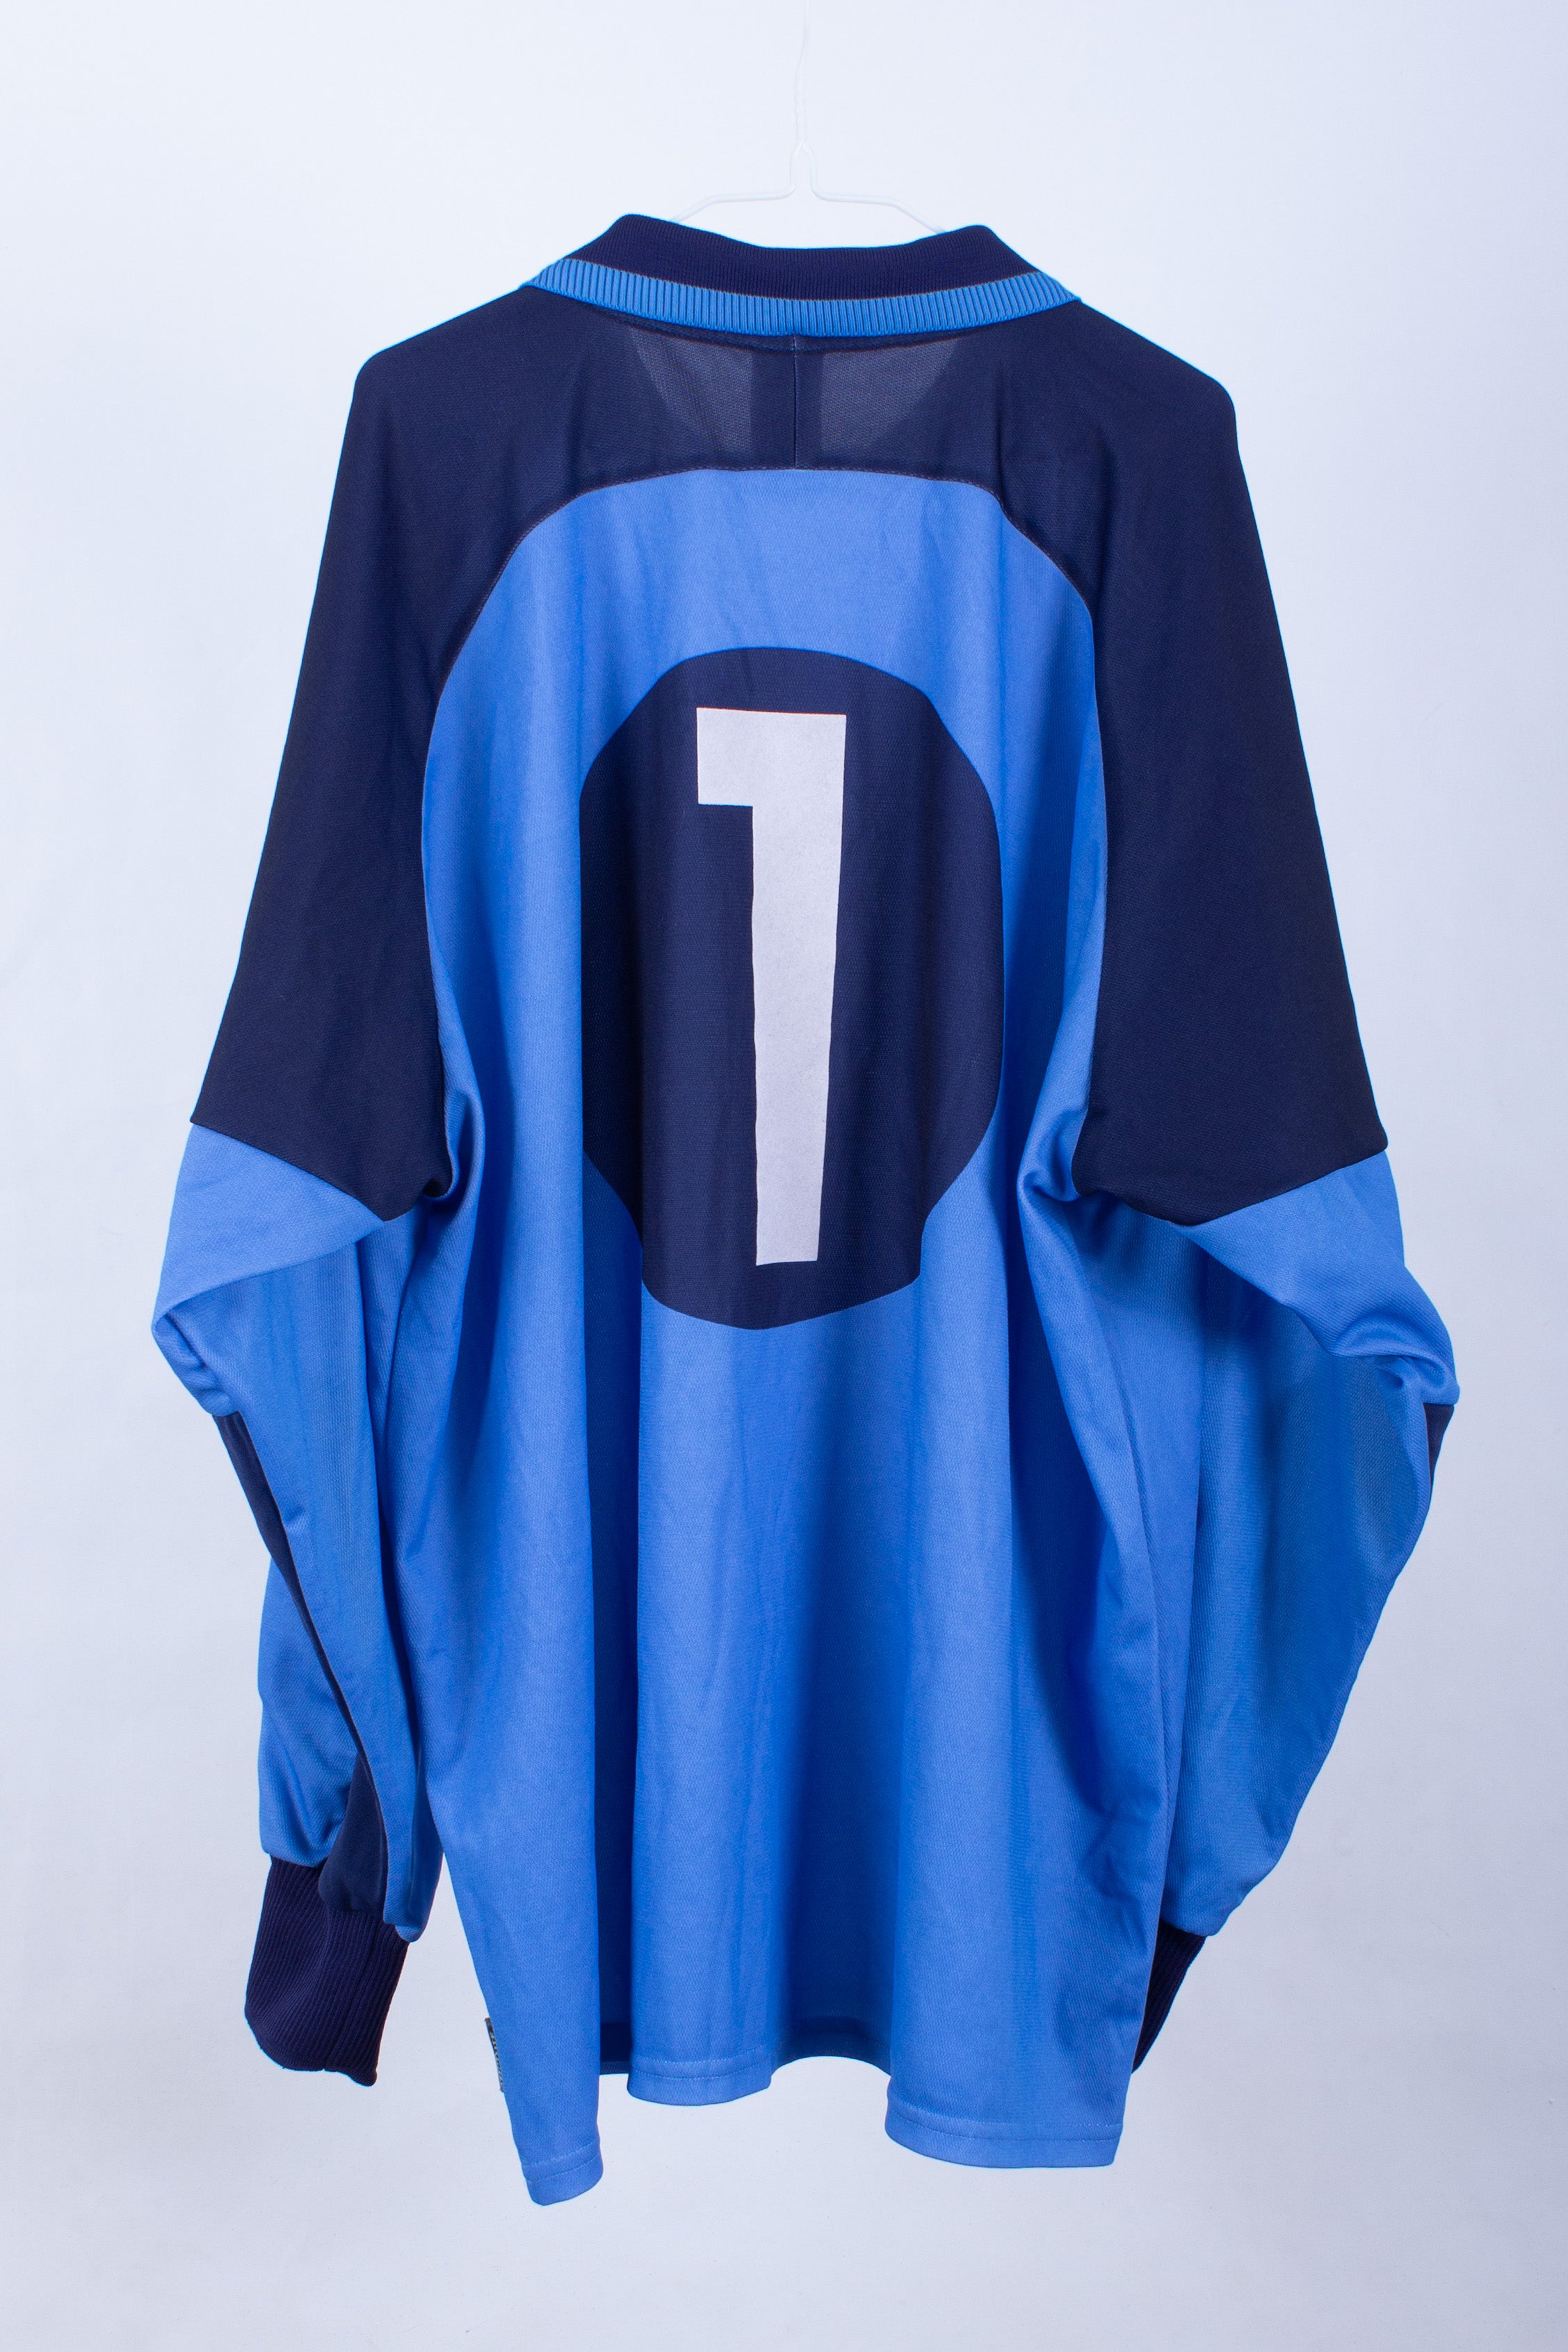 Adidas Oliver Kahn 2000/01 Goalkeeper Shirt | Vintage Goalkeeper Shirt